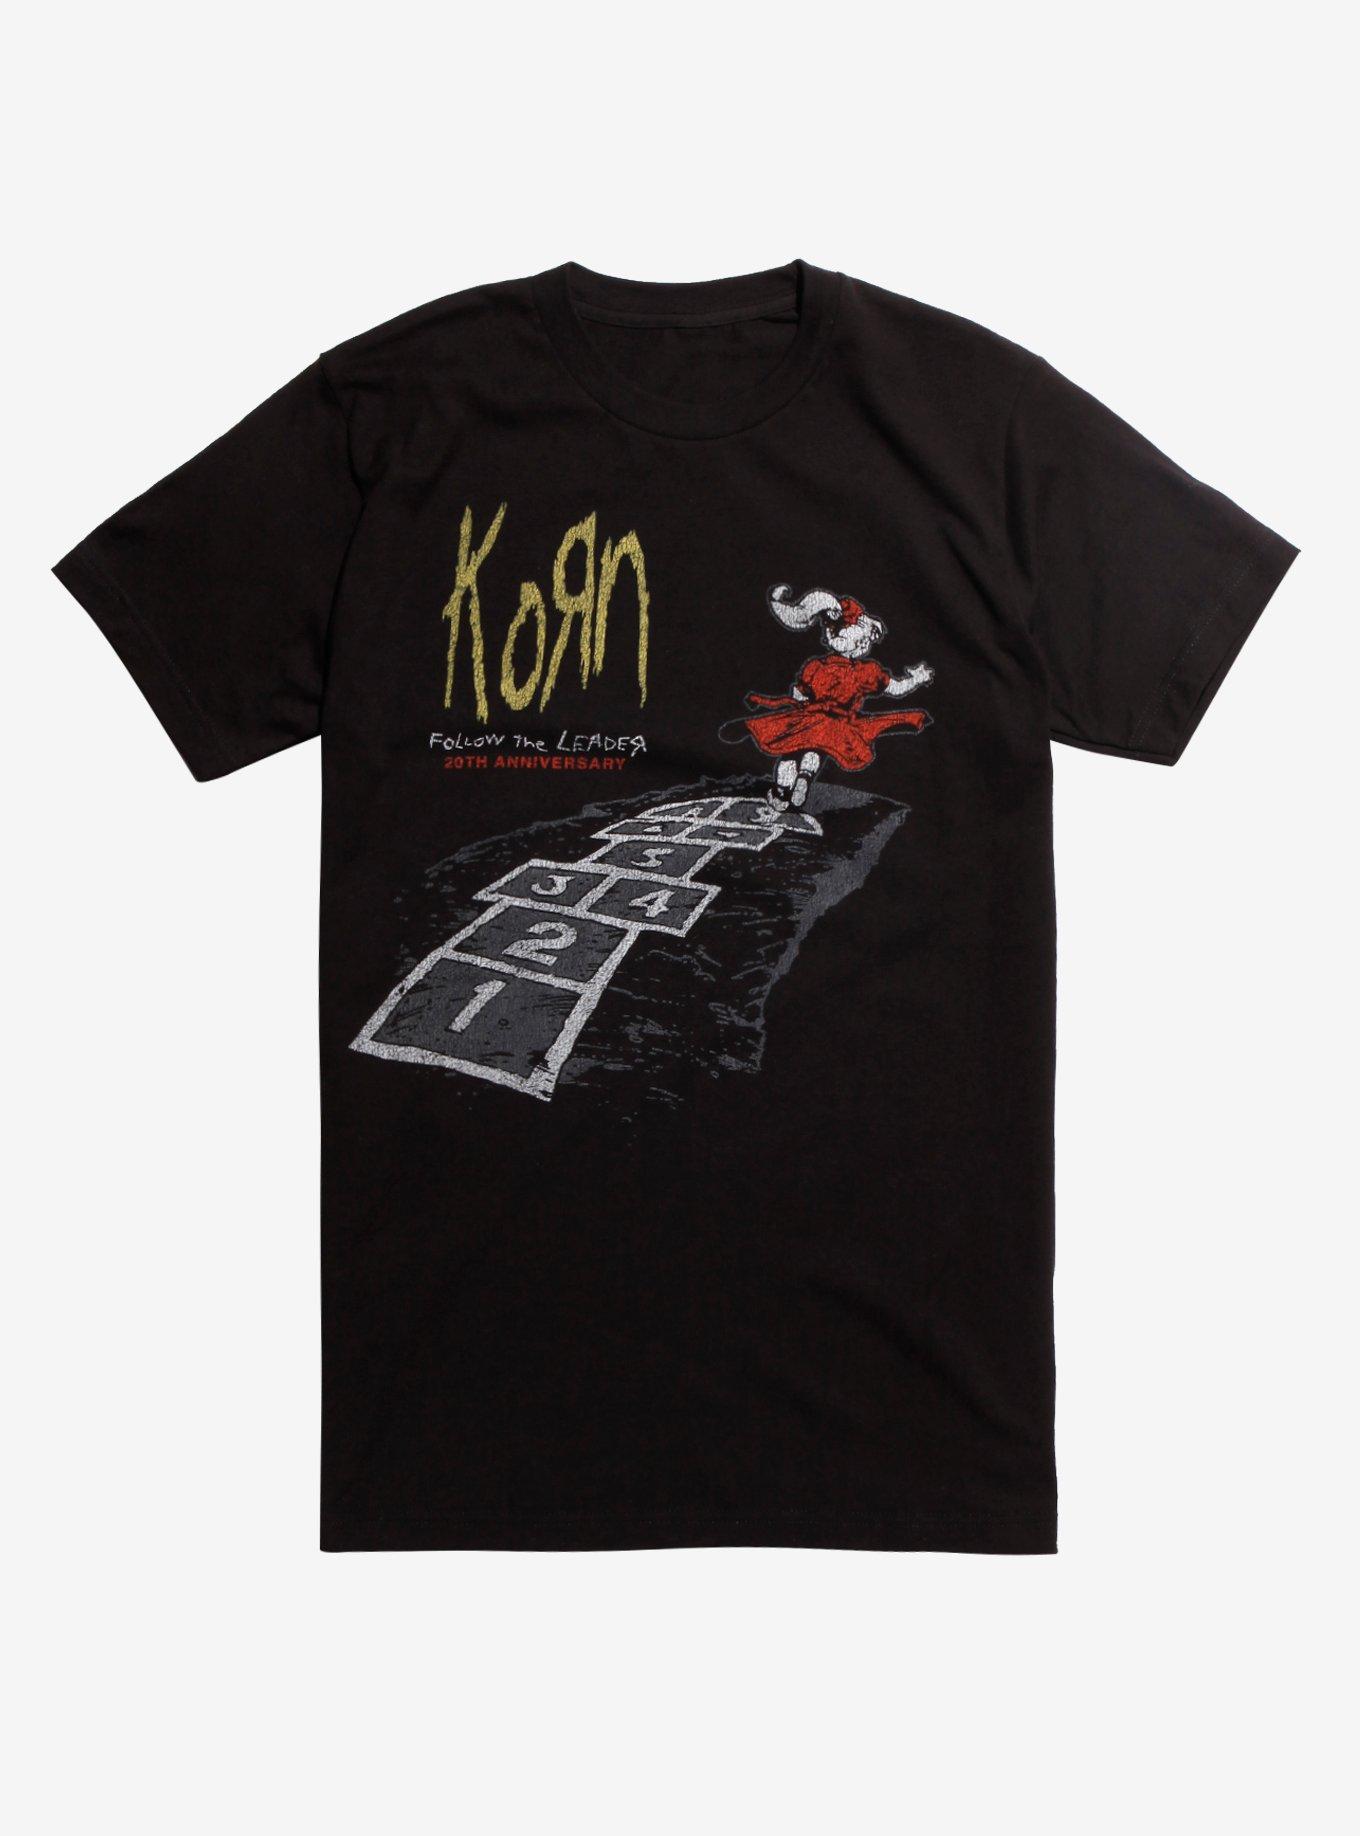 Korn Follow The Leader 20th Anniversary T-Shirt | Hot Topic